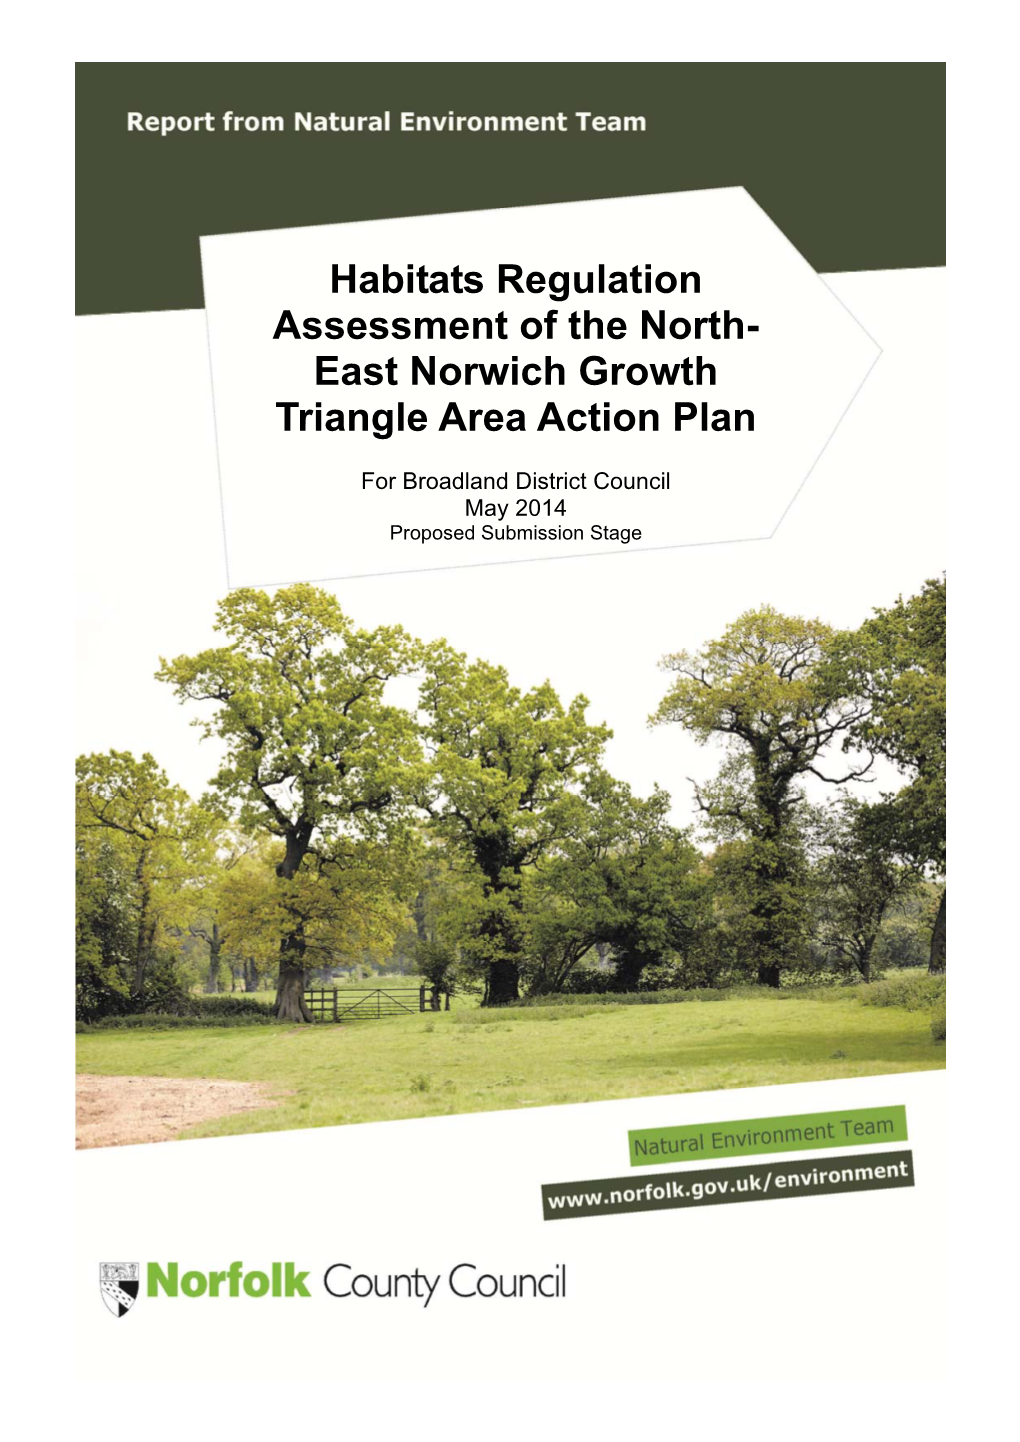 Growth Triangle Area Action Plan Habitats Regulation Assessment